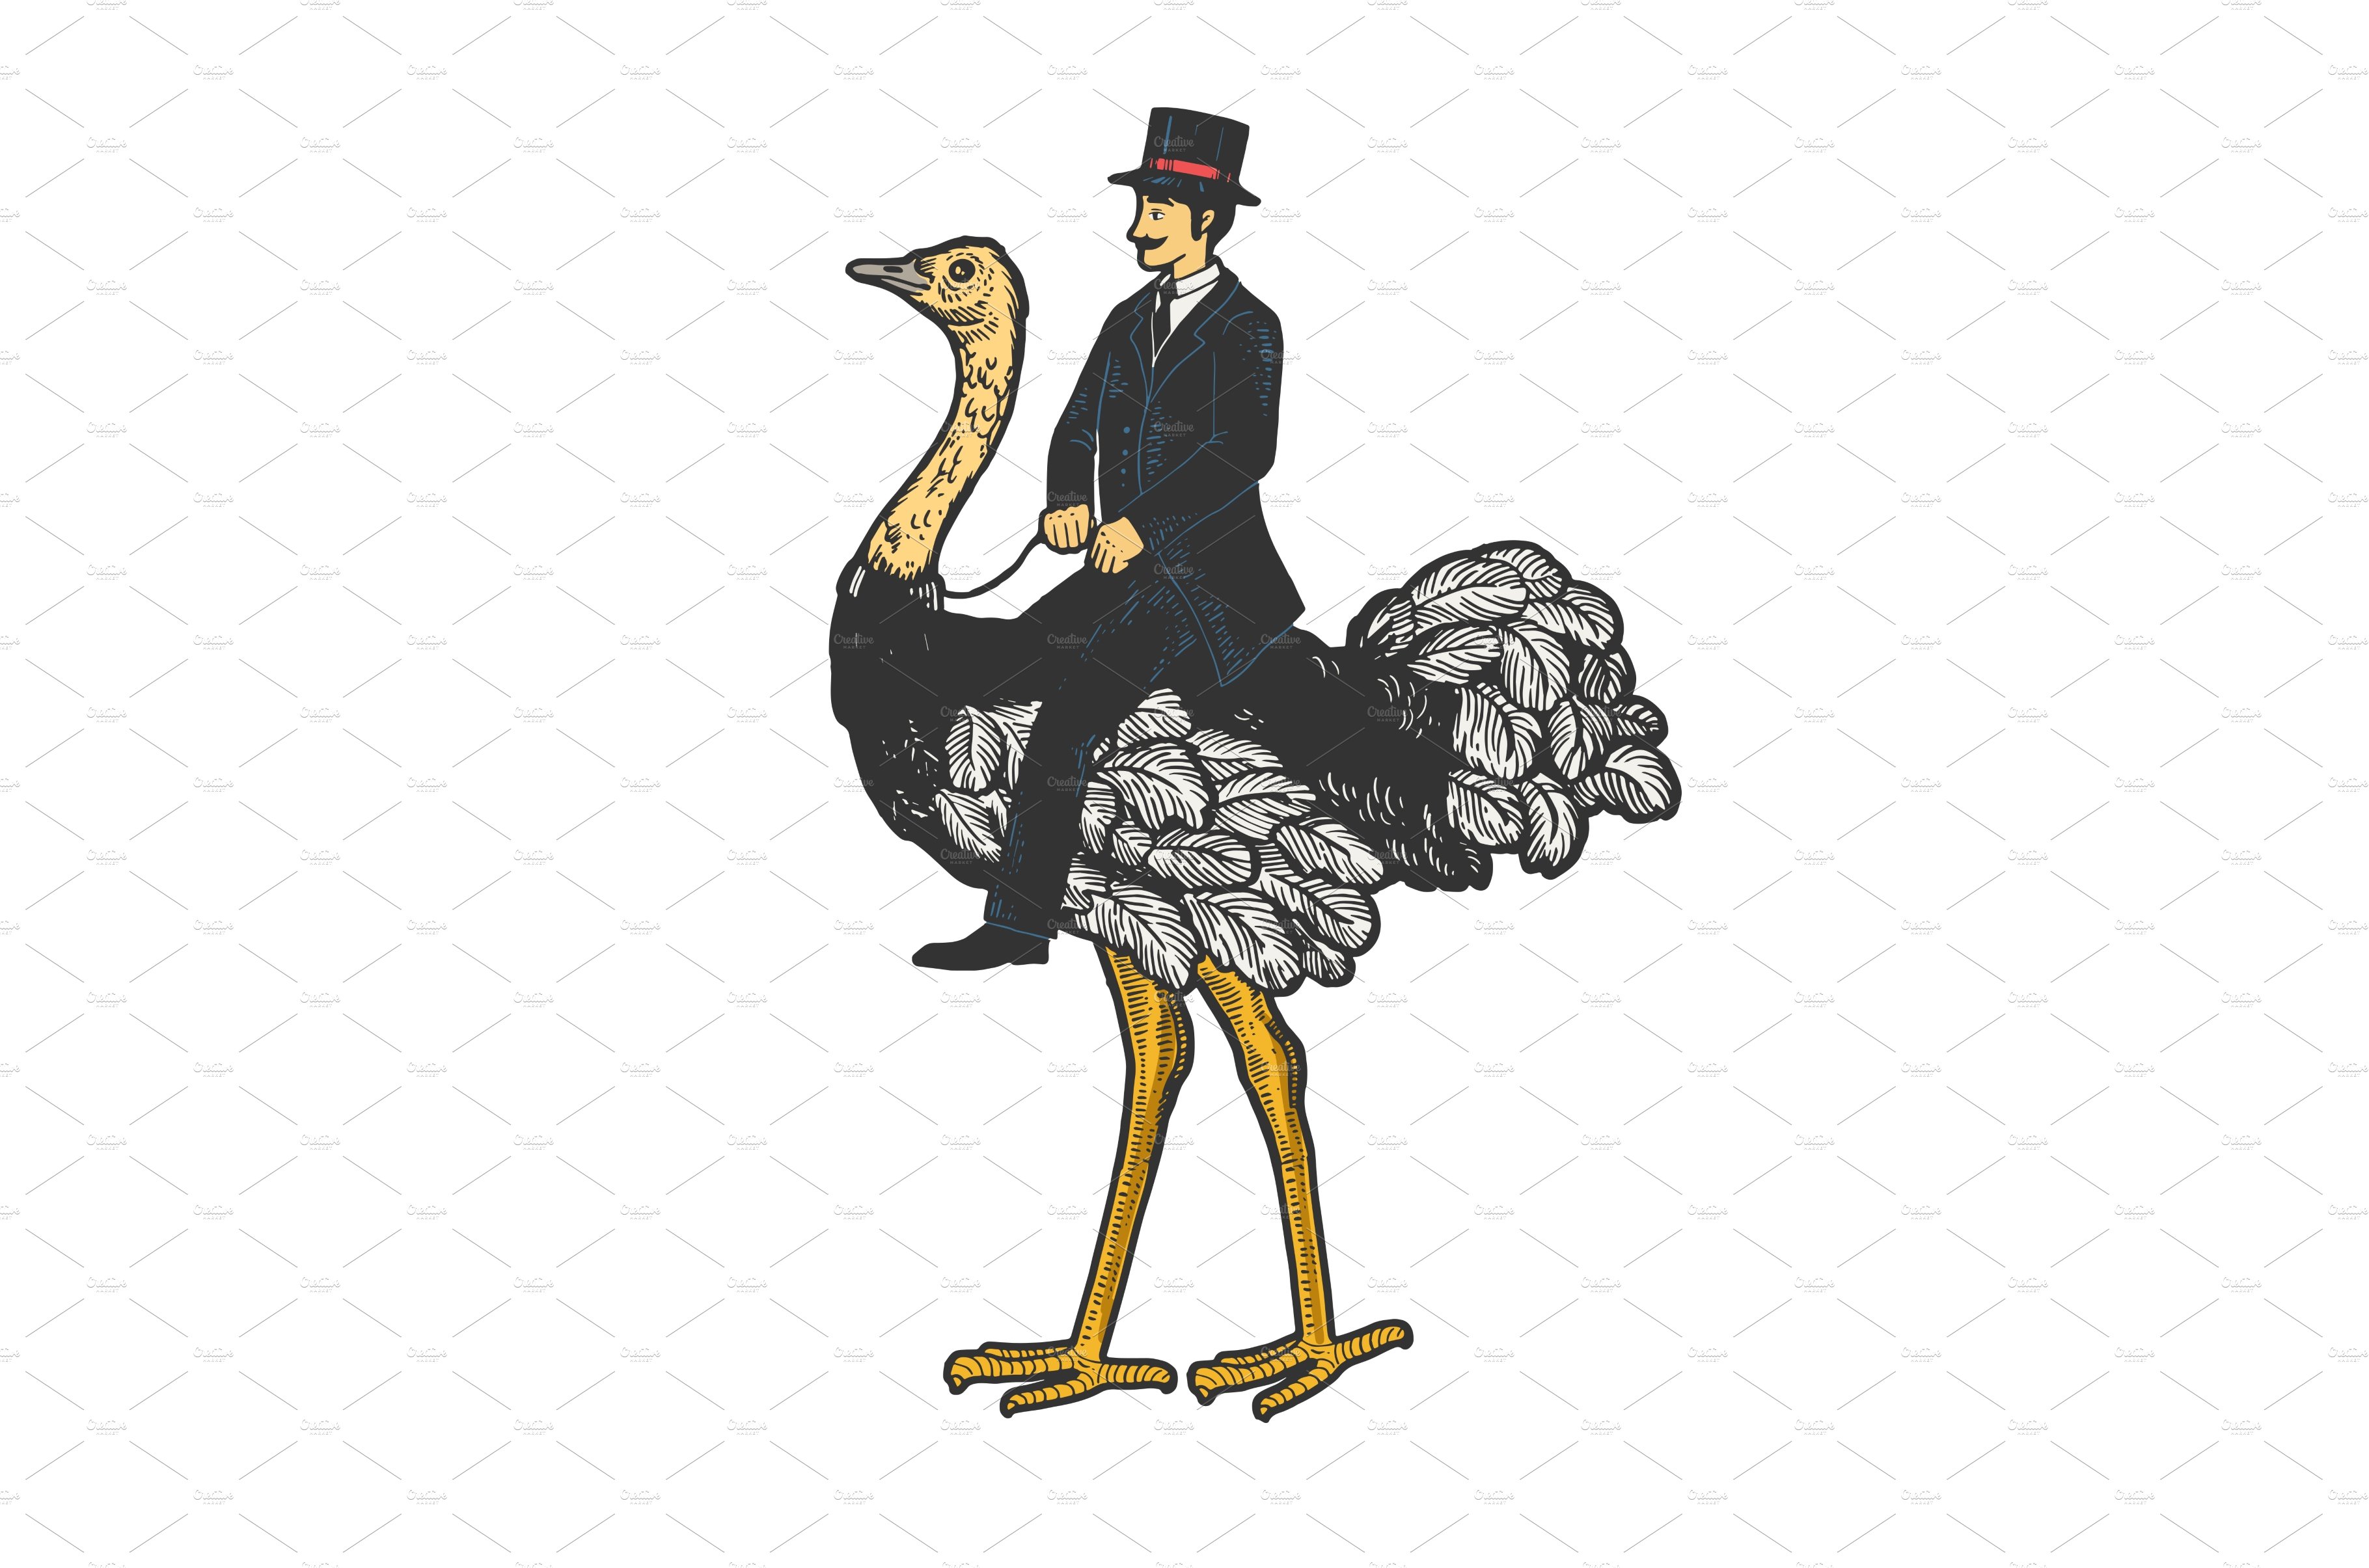 Gentleman riding an ostrich sketch cover image.